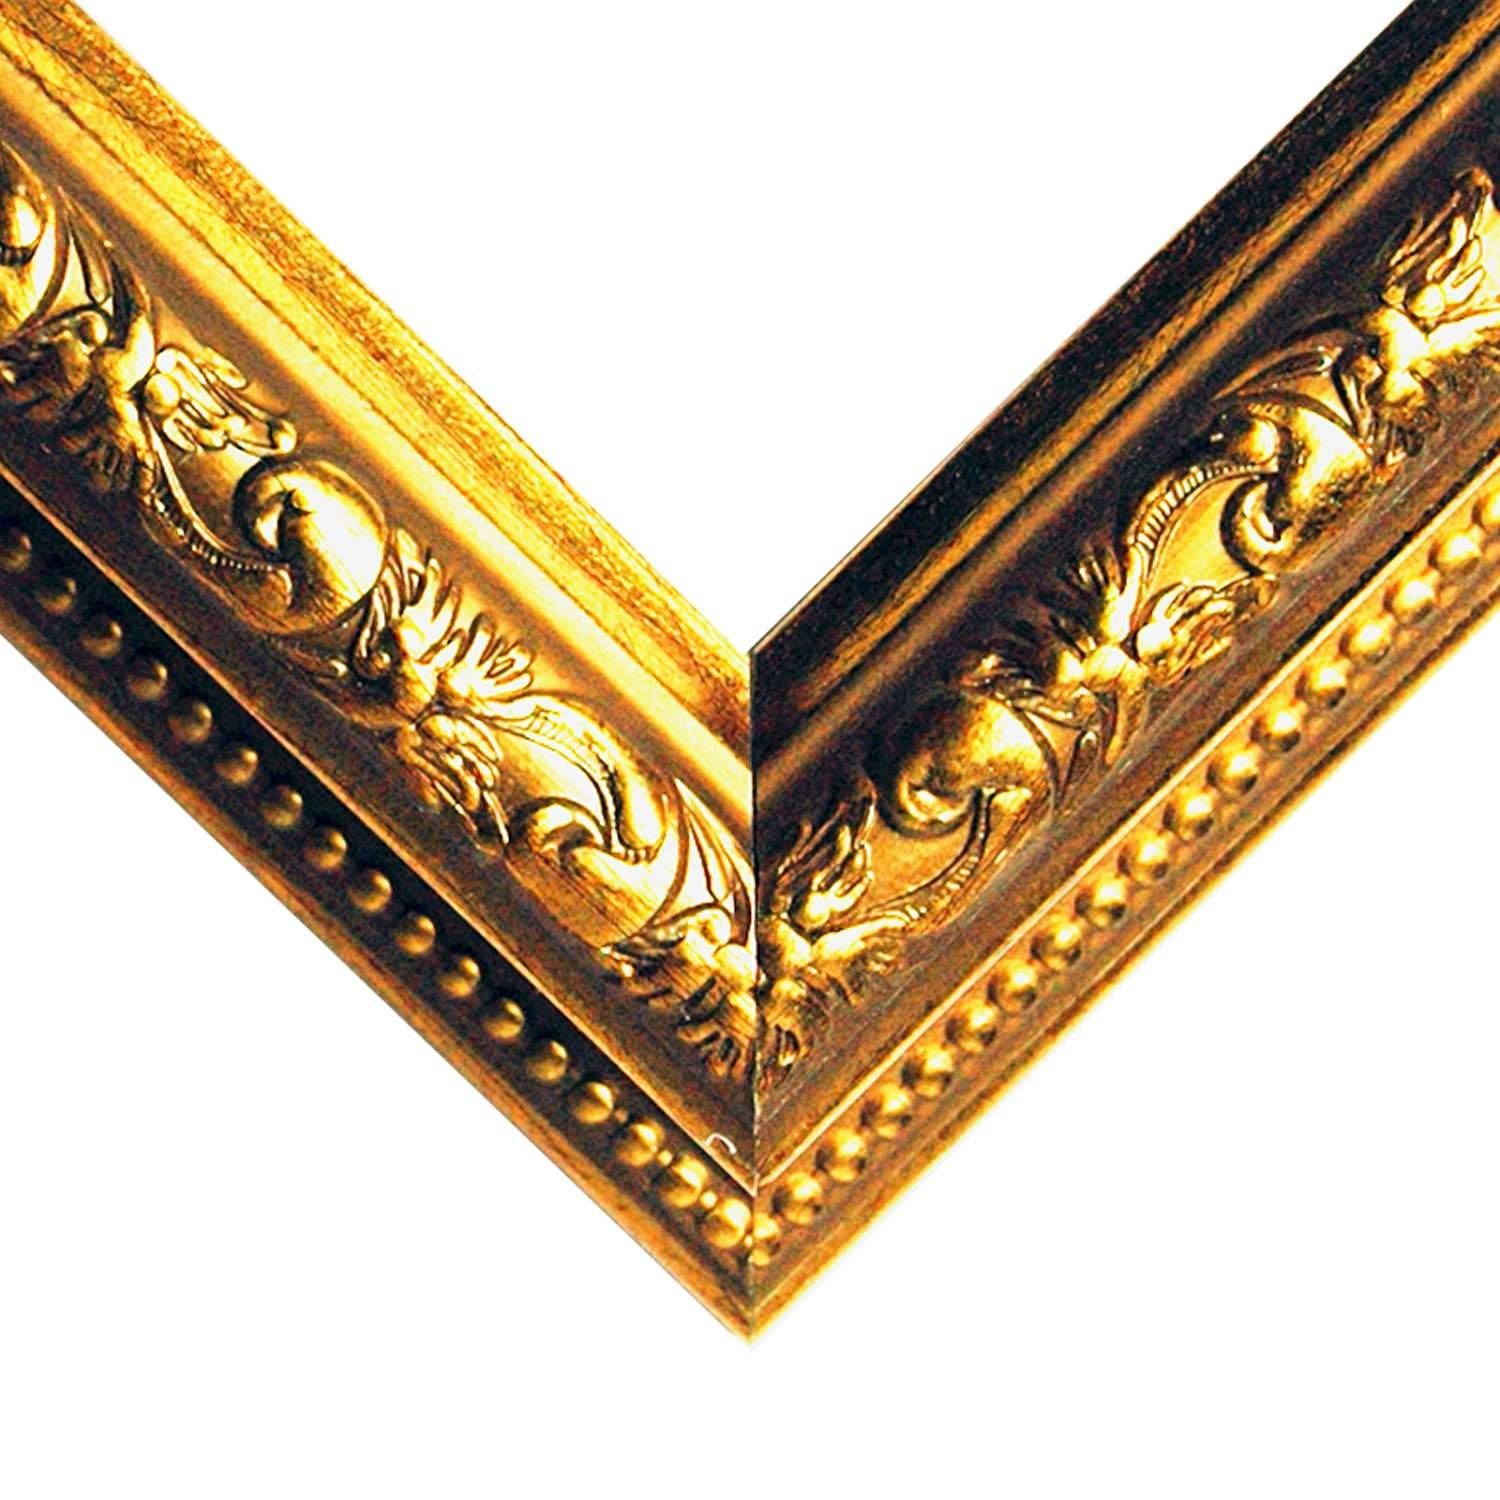 ORO, Neumann Varianten fein Bilderrahmen verziert verschiedene Barockrahmen 812 gold Einzelrahmen